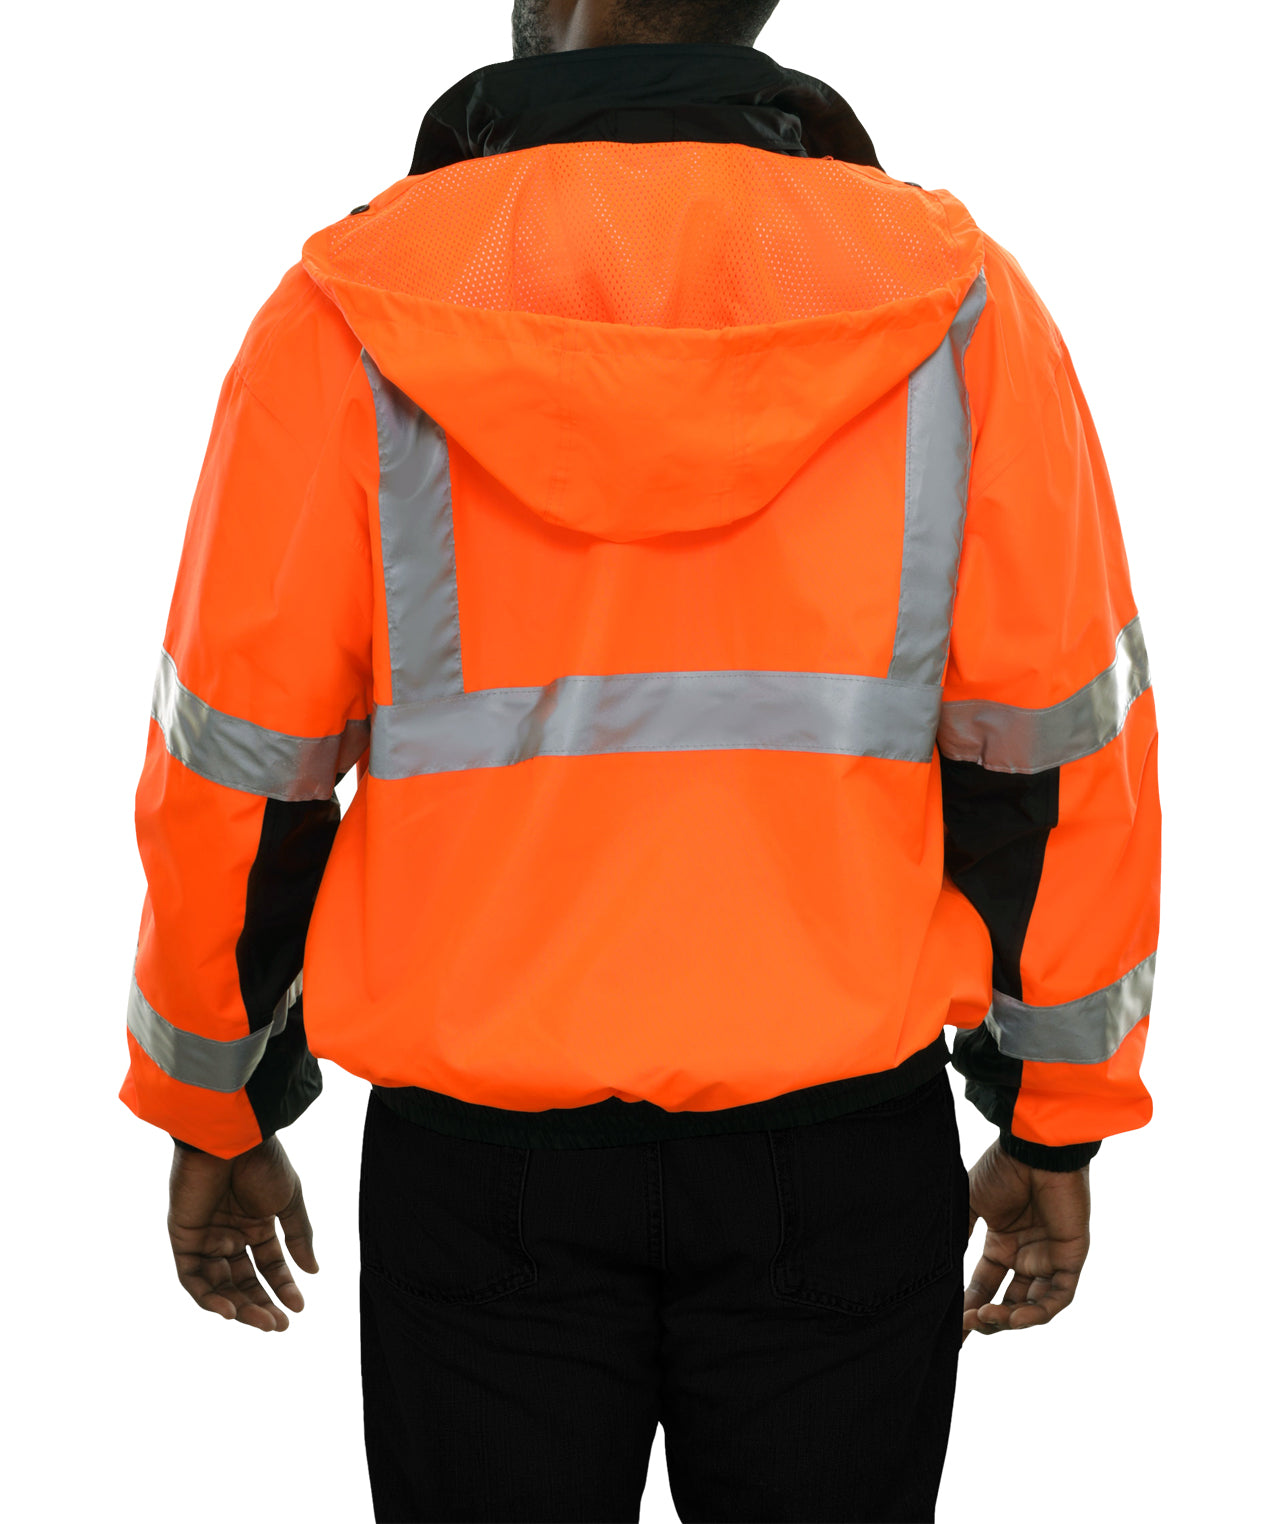 412STOB Safety Jacket: Hi-Vis Bomber: Zip-Out Liner: Breathable Waterproof